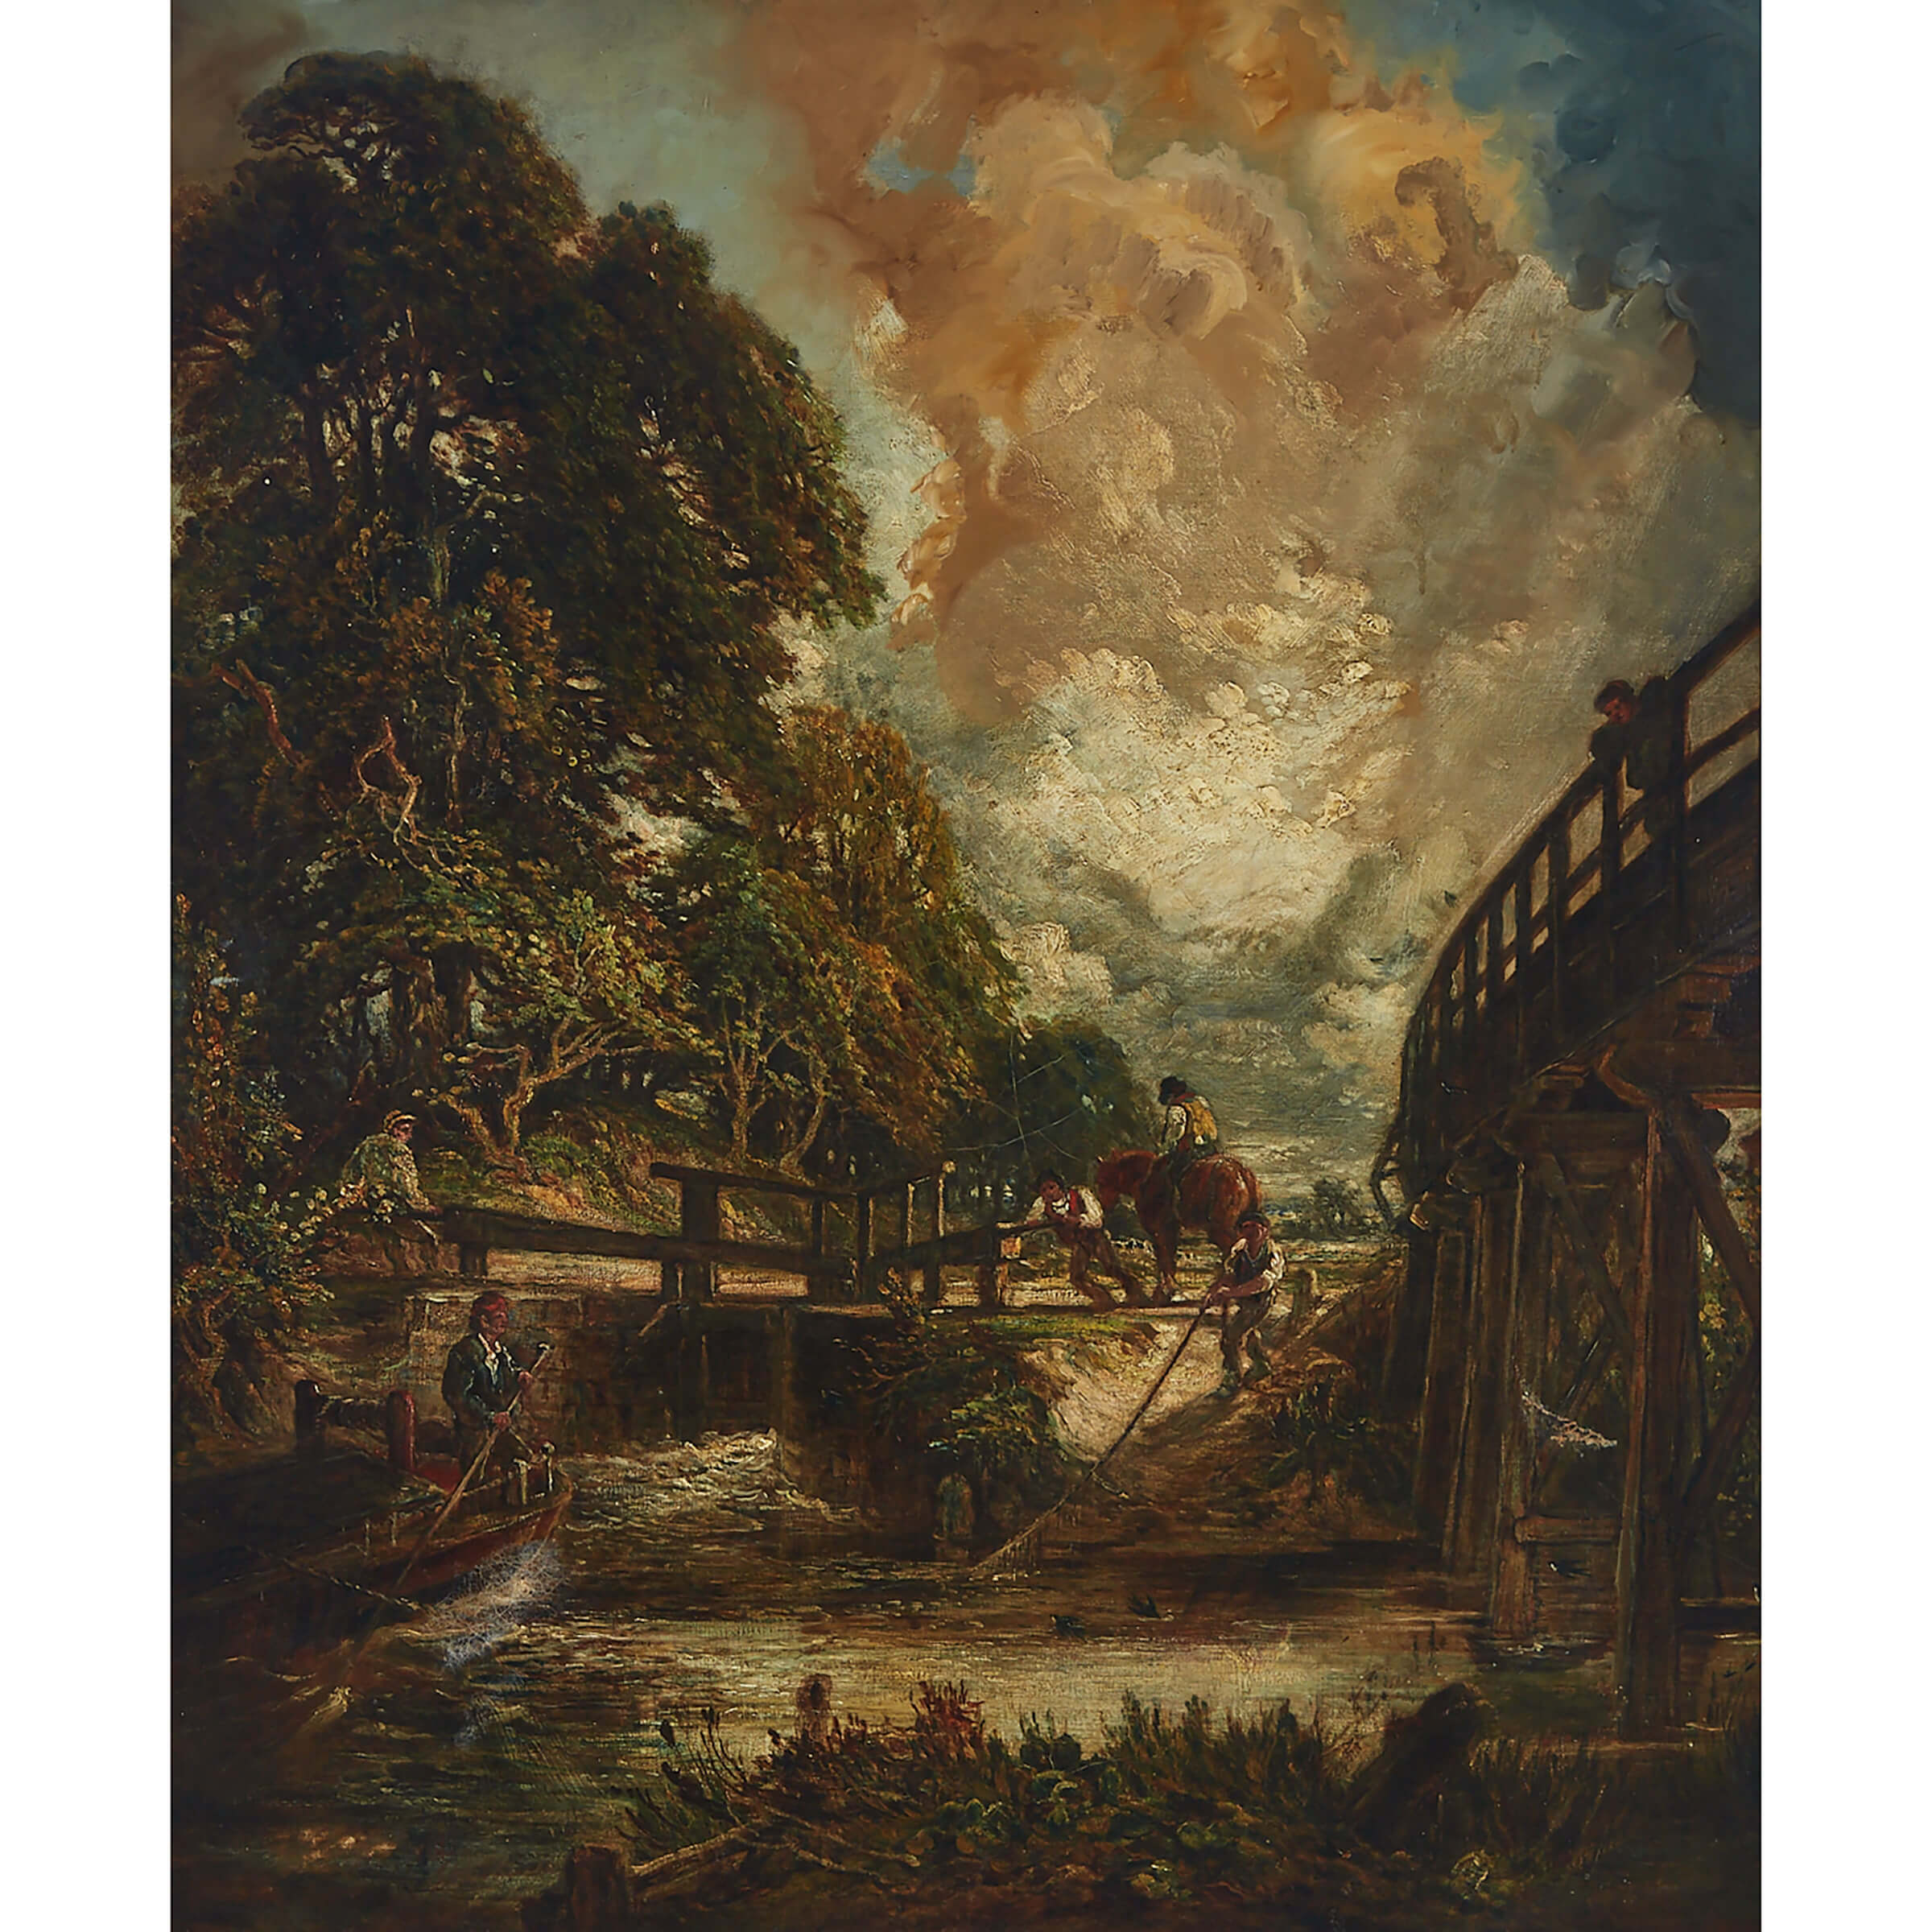 Follower of John Constable (1776–1837), British